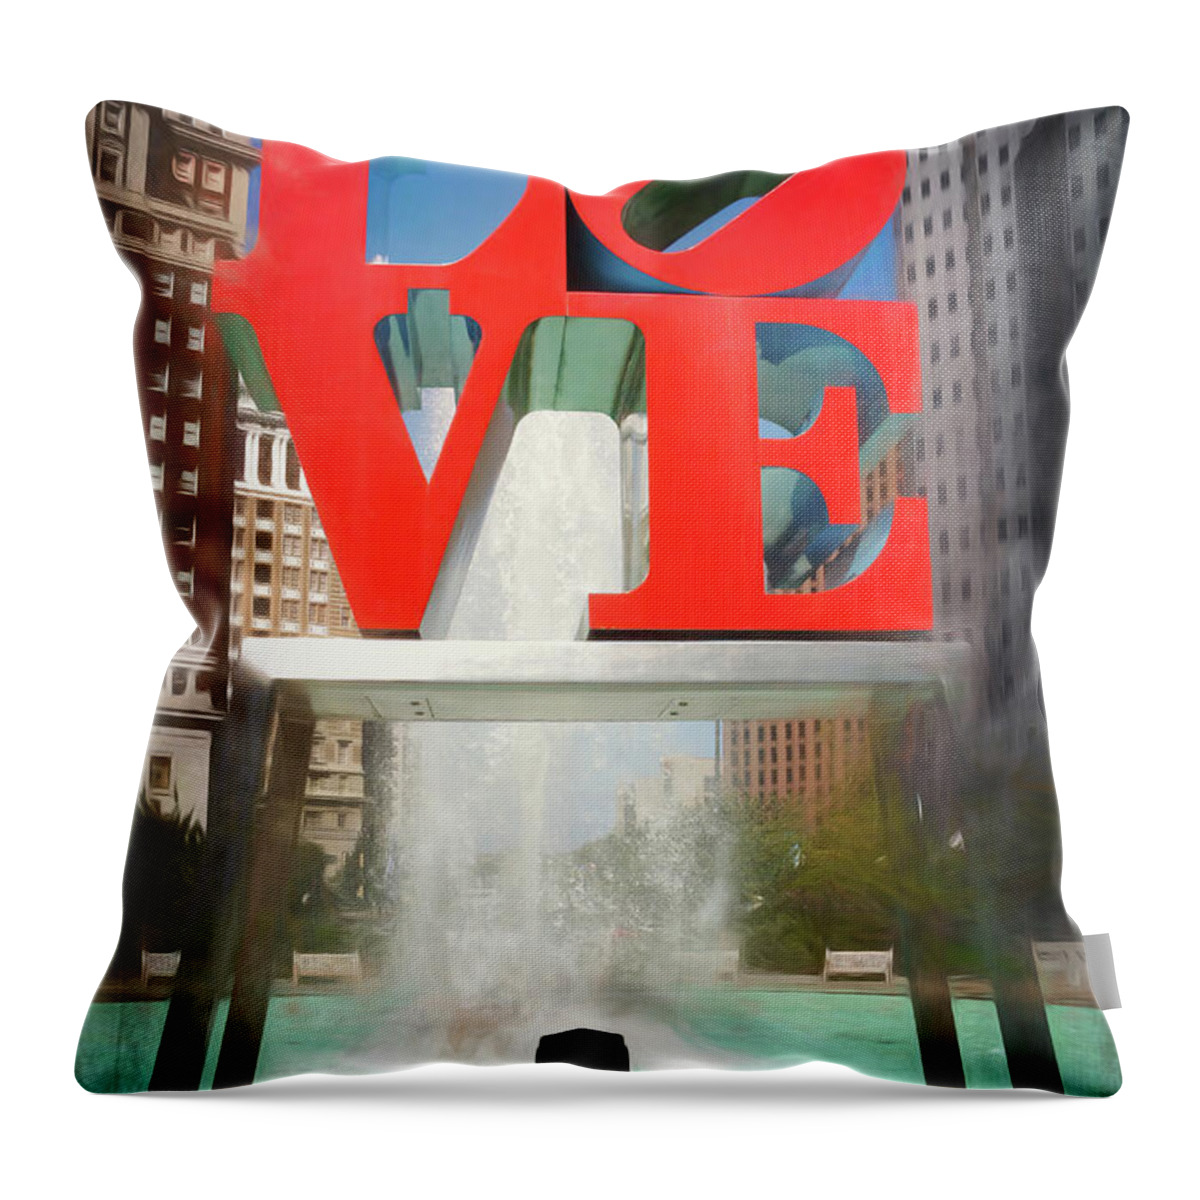 Philadelphia Throw Pillow featuring the photograph Philadelphia Love by Carol Japp